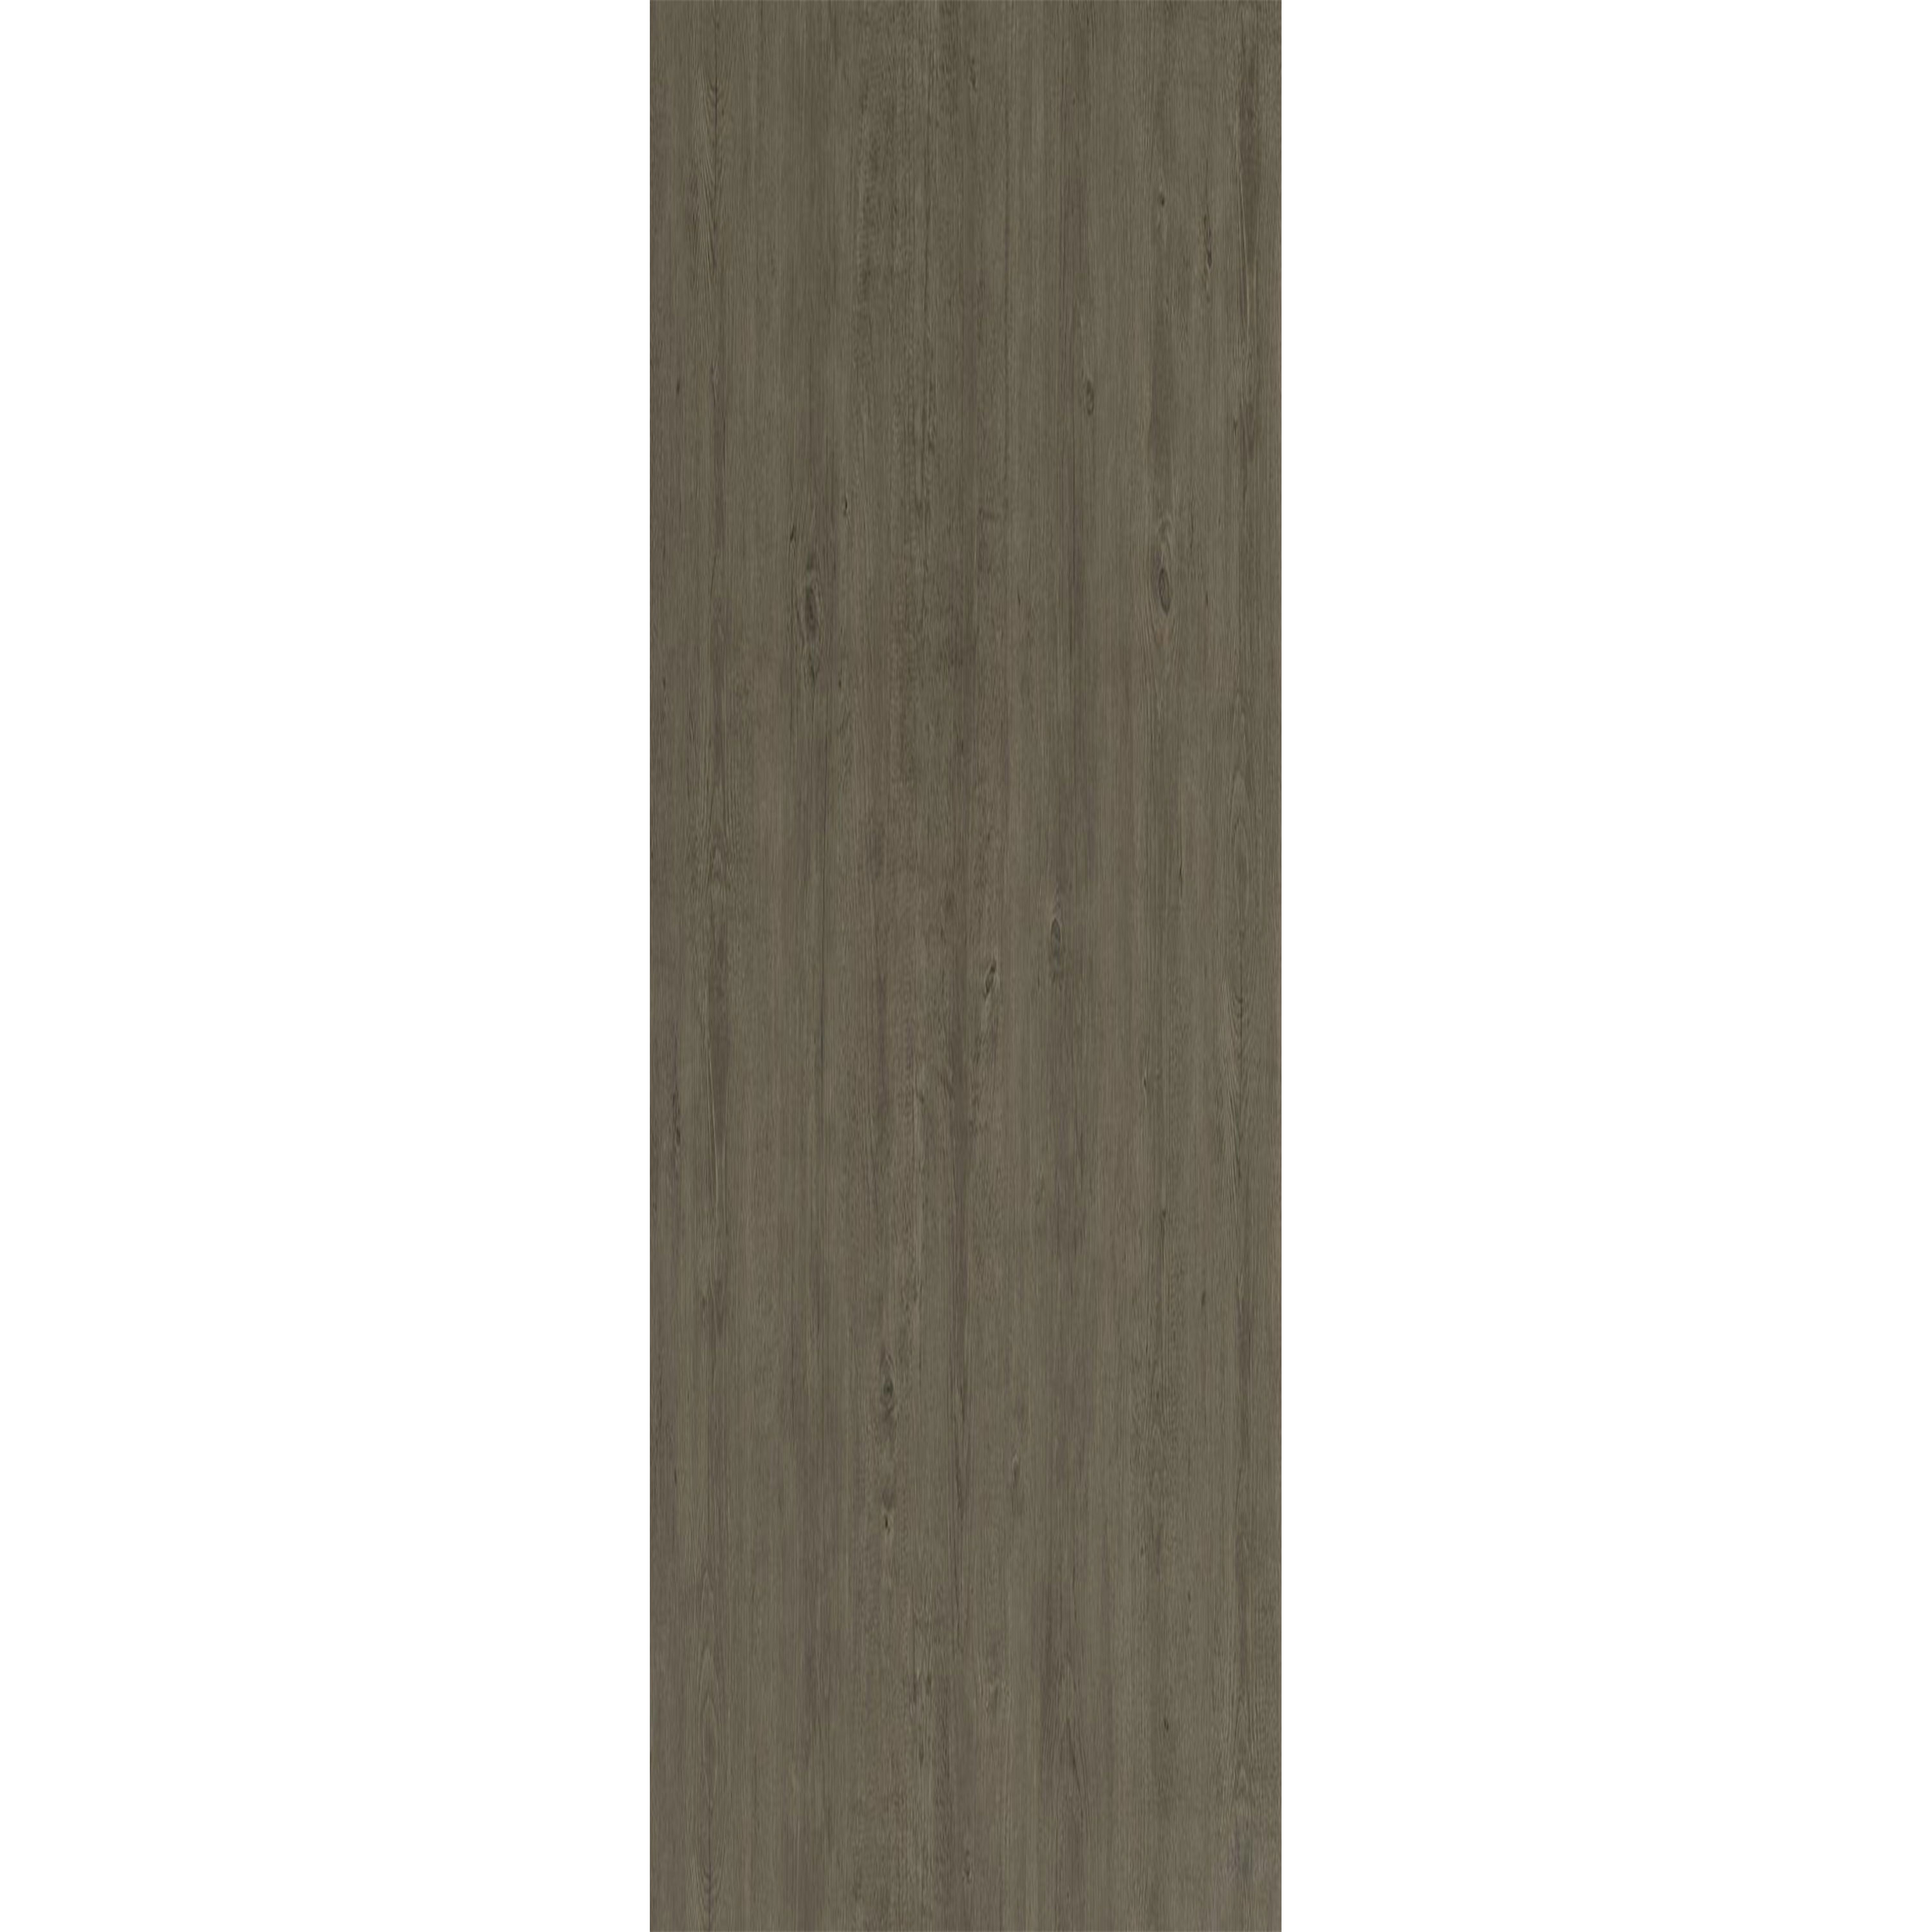 Vinylboden Klicksystem Woodford Taupe 17,2x121cm